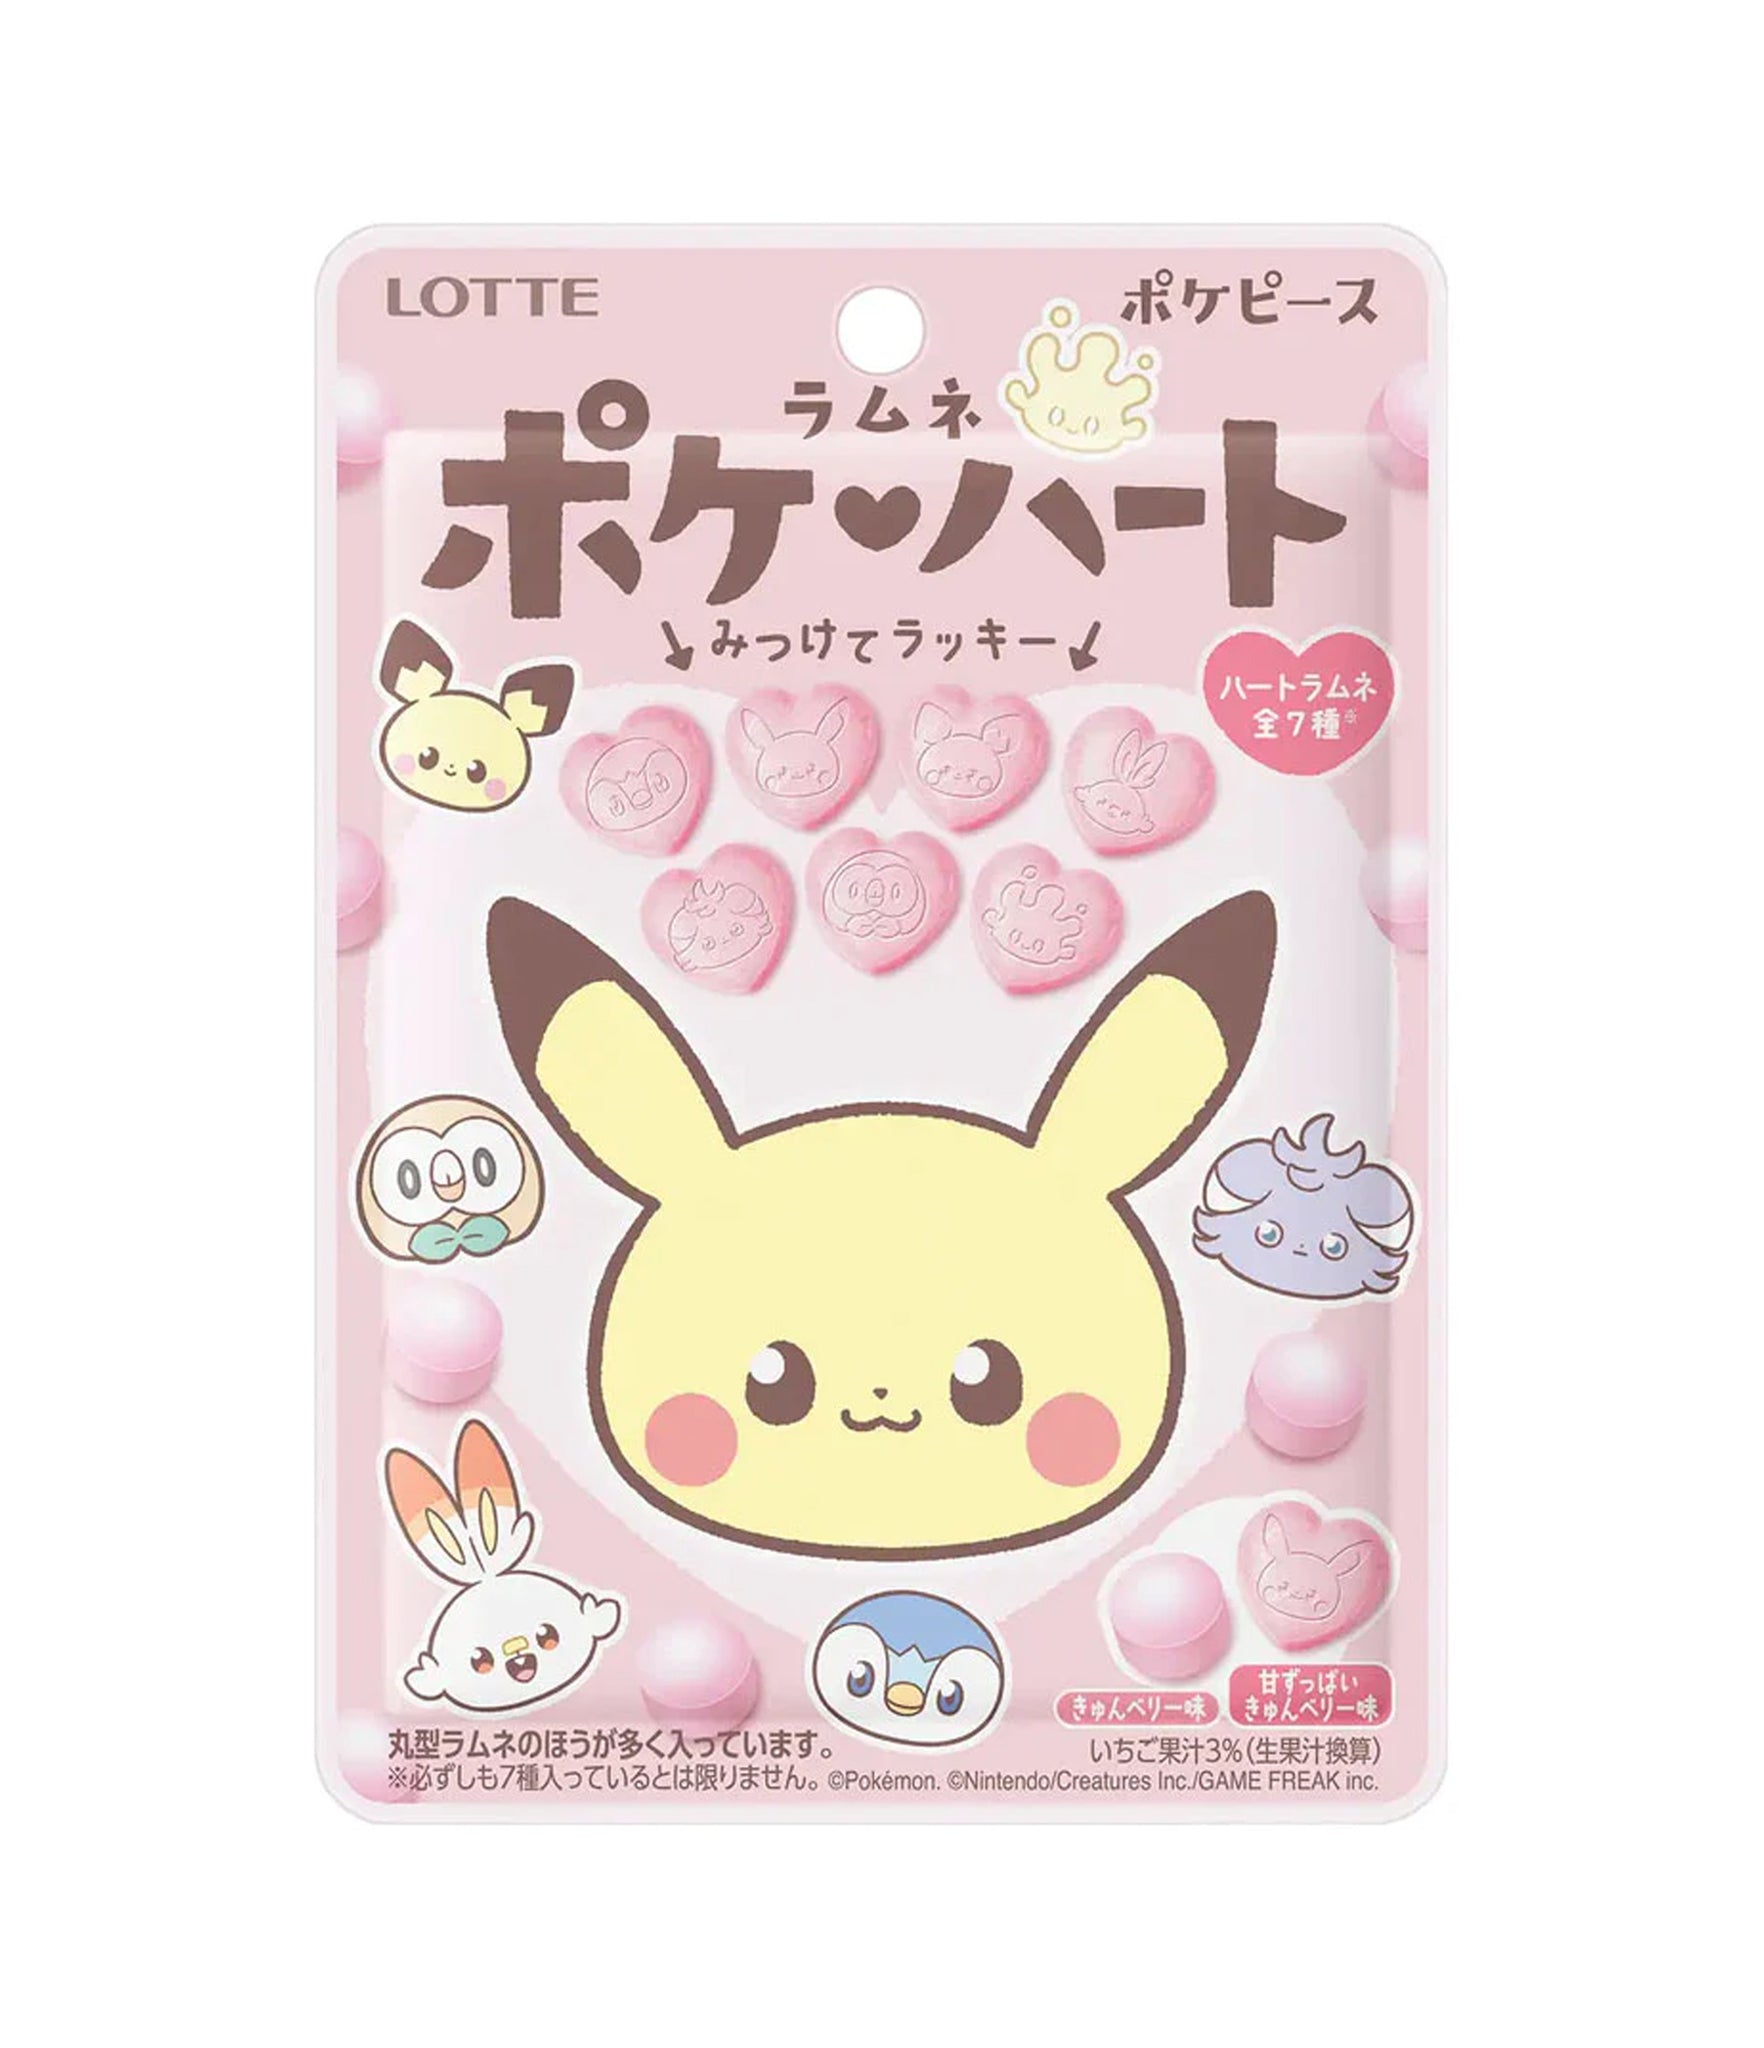 Lotte Poke Heart Ramune Candy 10 pack (Japan)